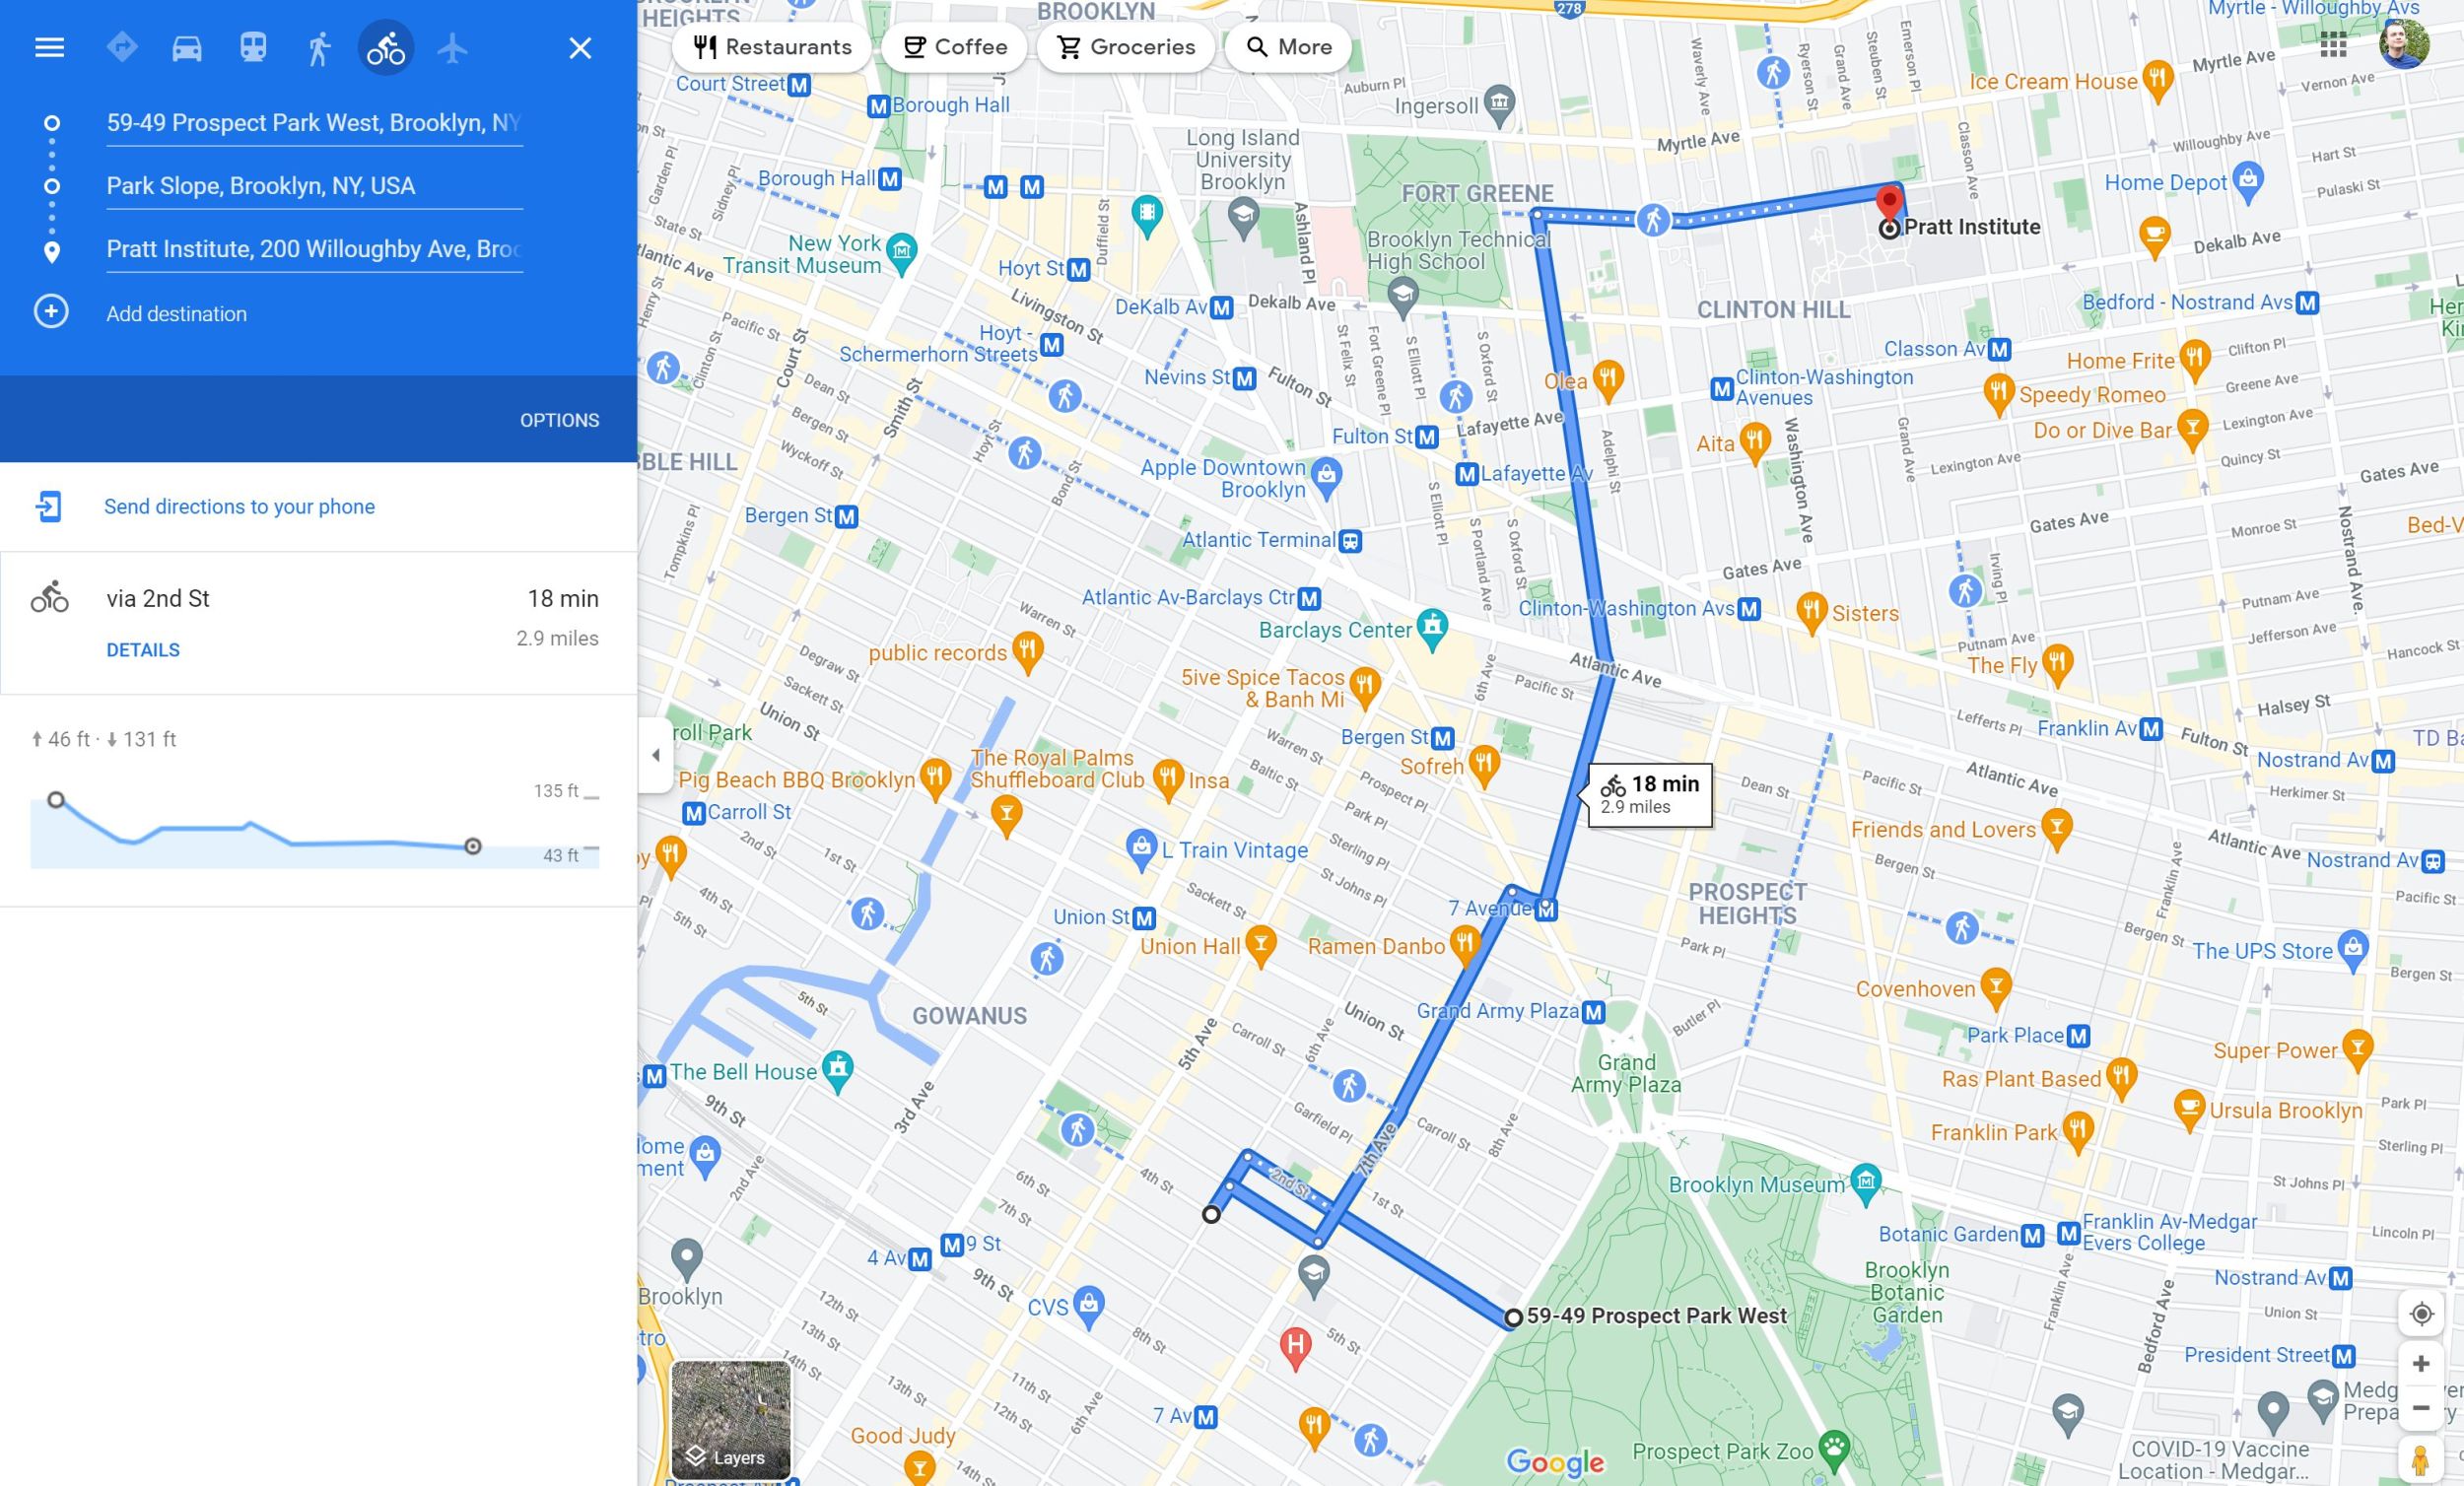 asdasd - Google My Maps